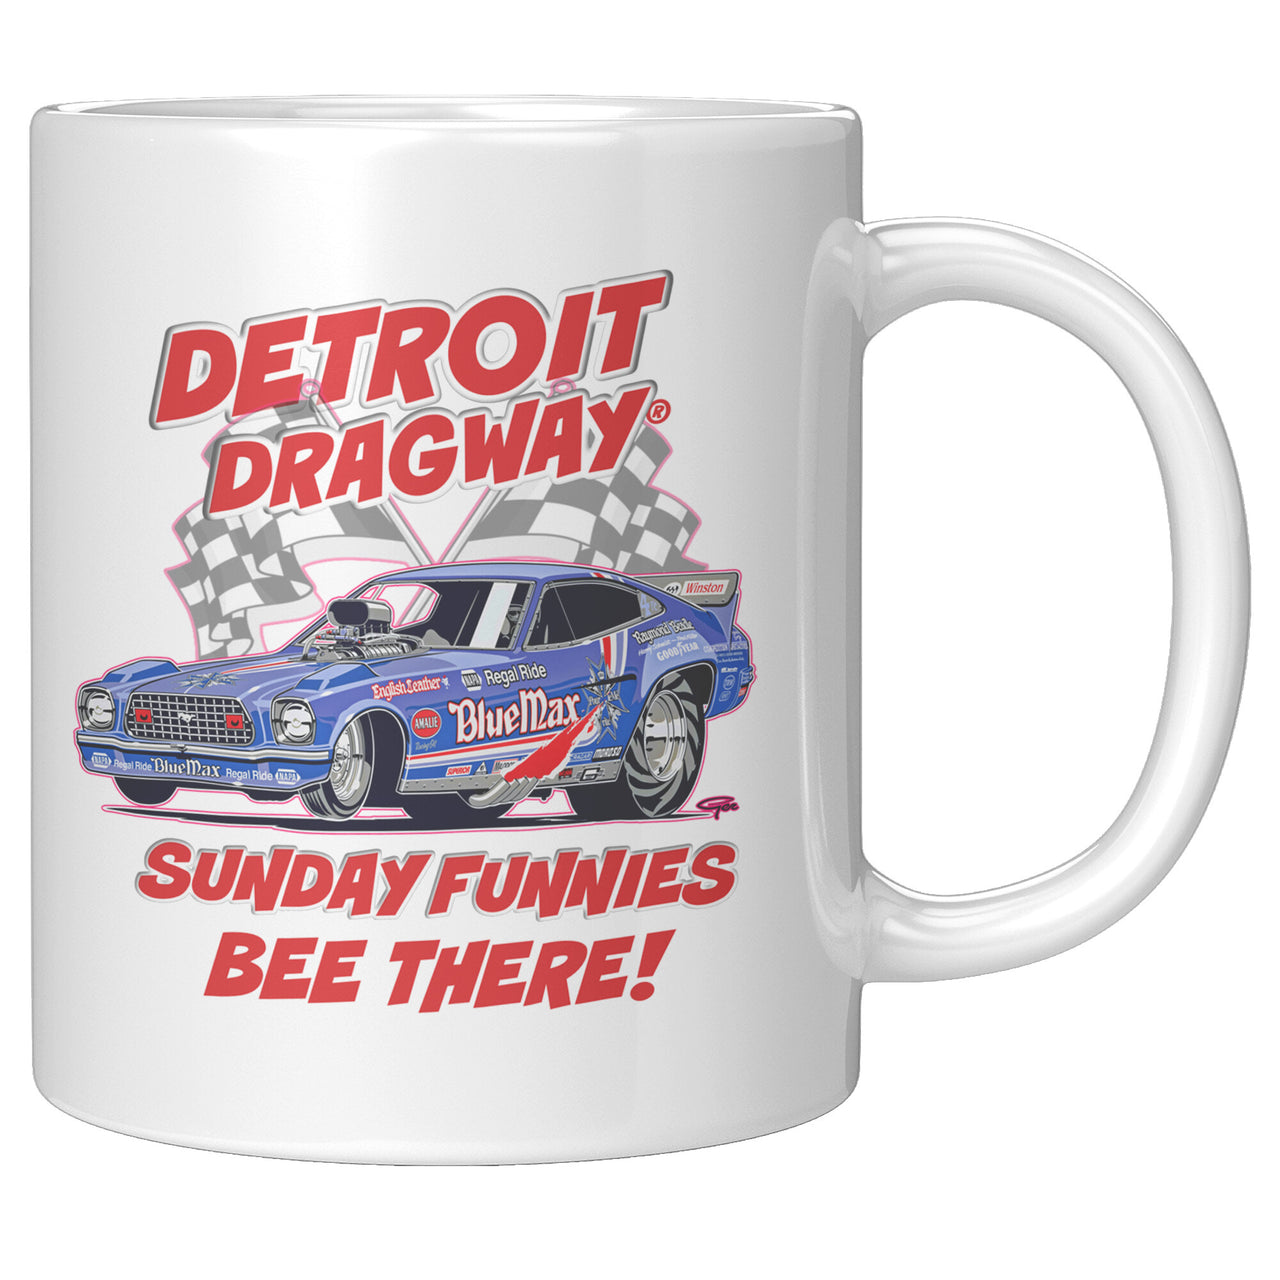 *Detroit Dragway® Sunday Funnies Max Mug